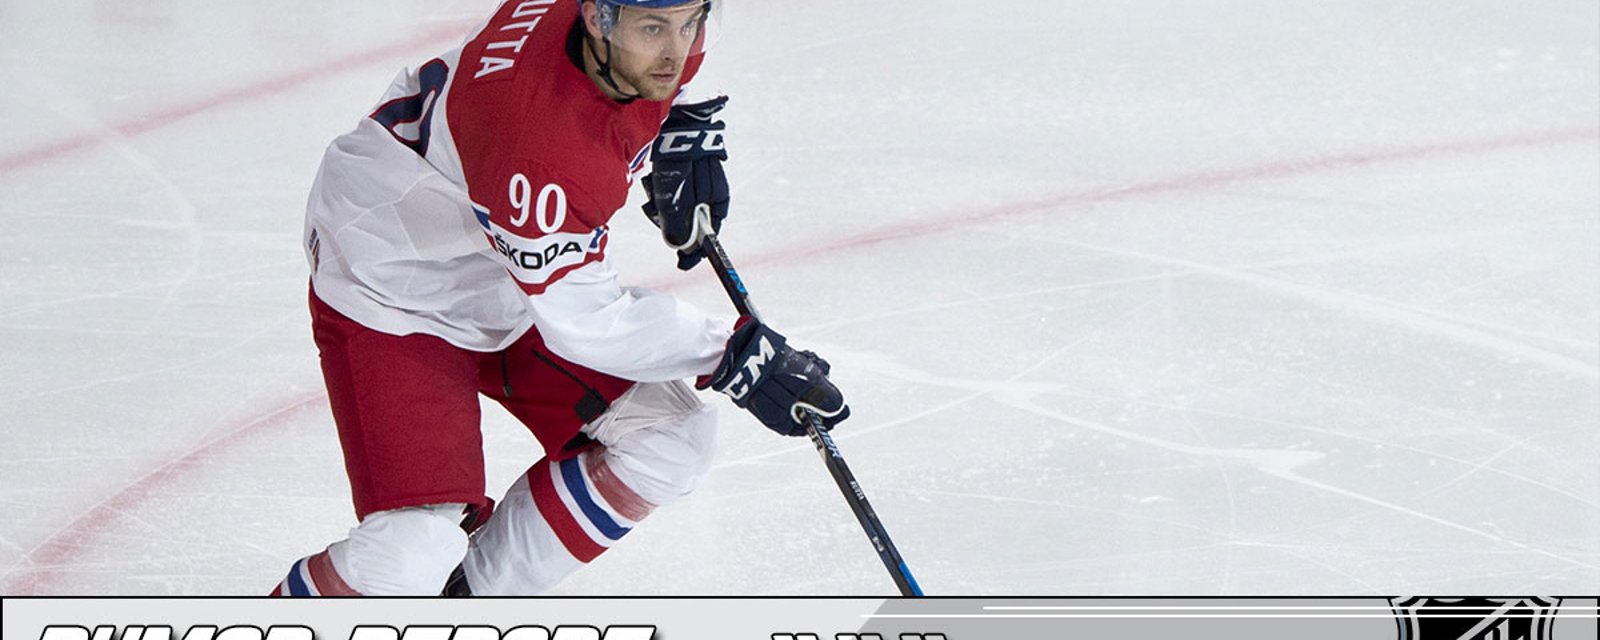 Breaking: Top scoring Czech defenseman drawing big NHL interest